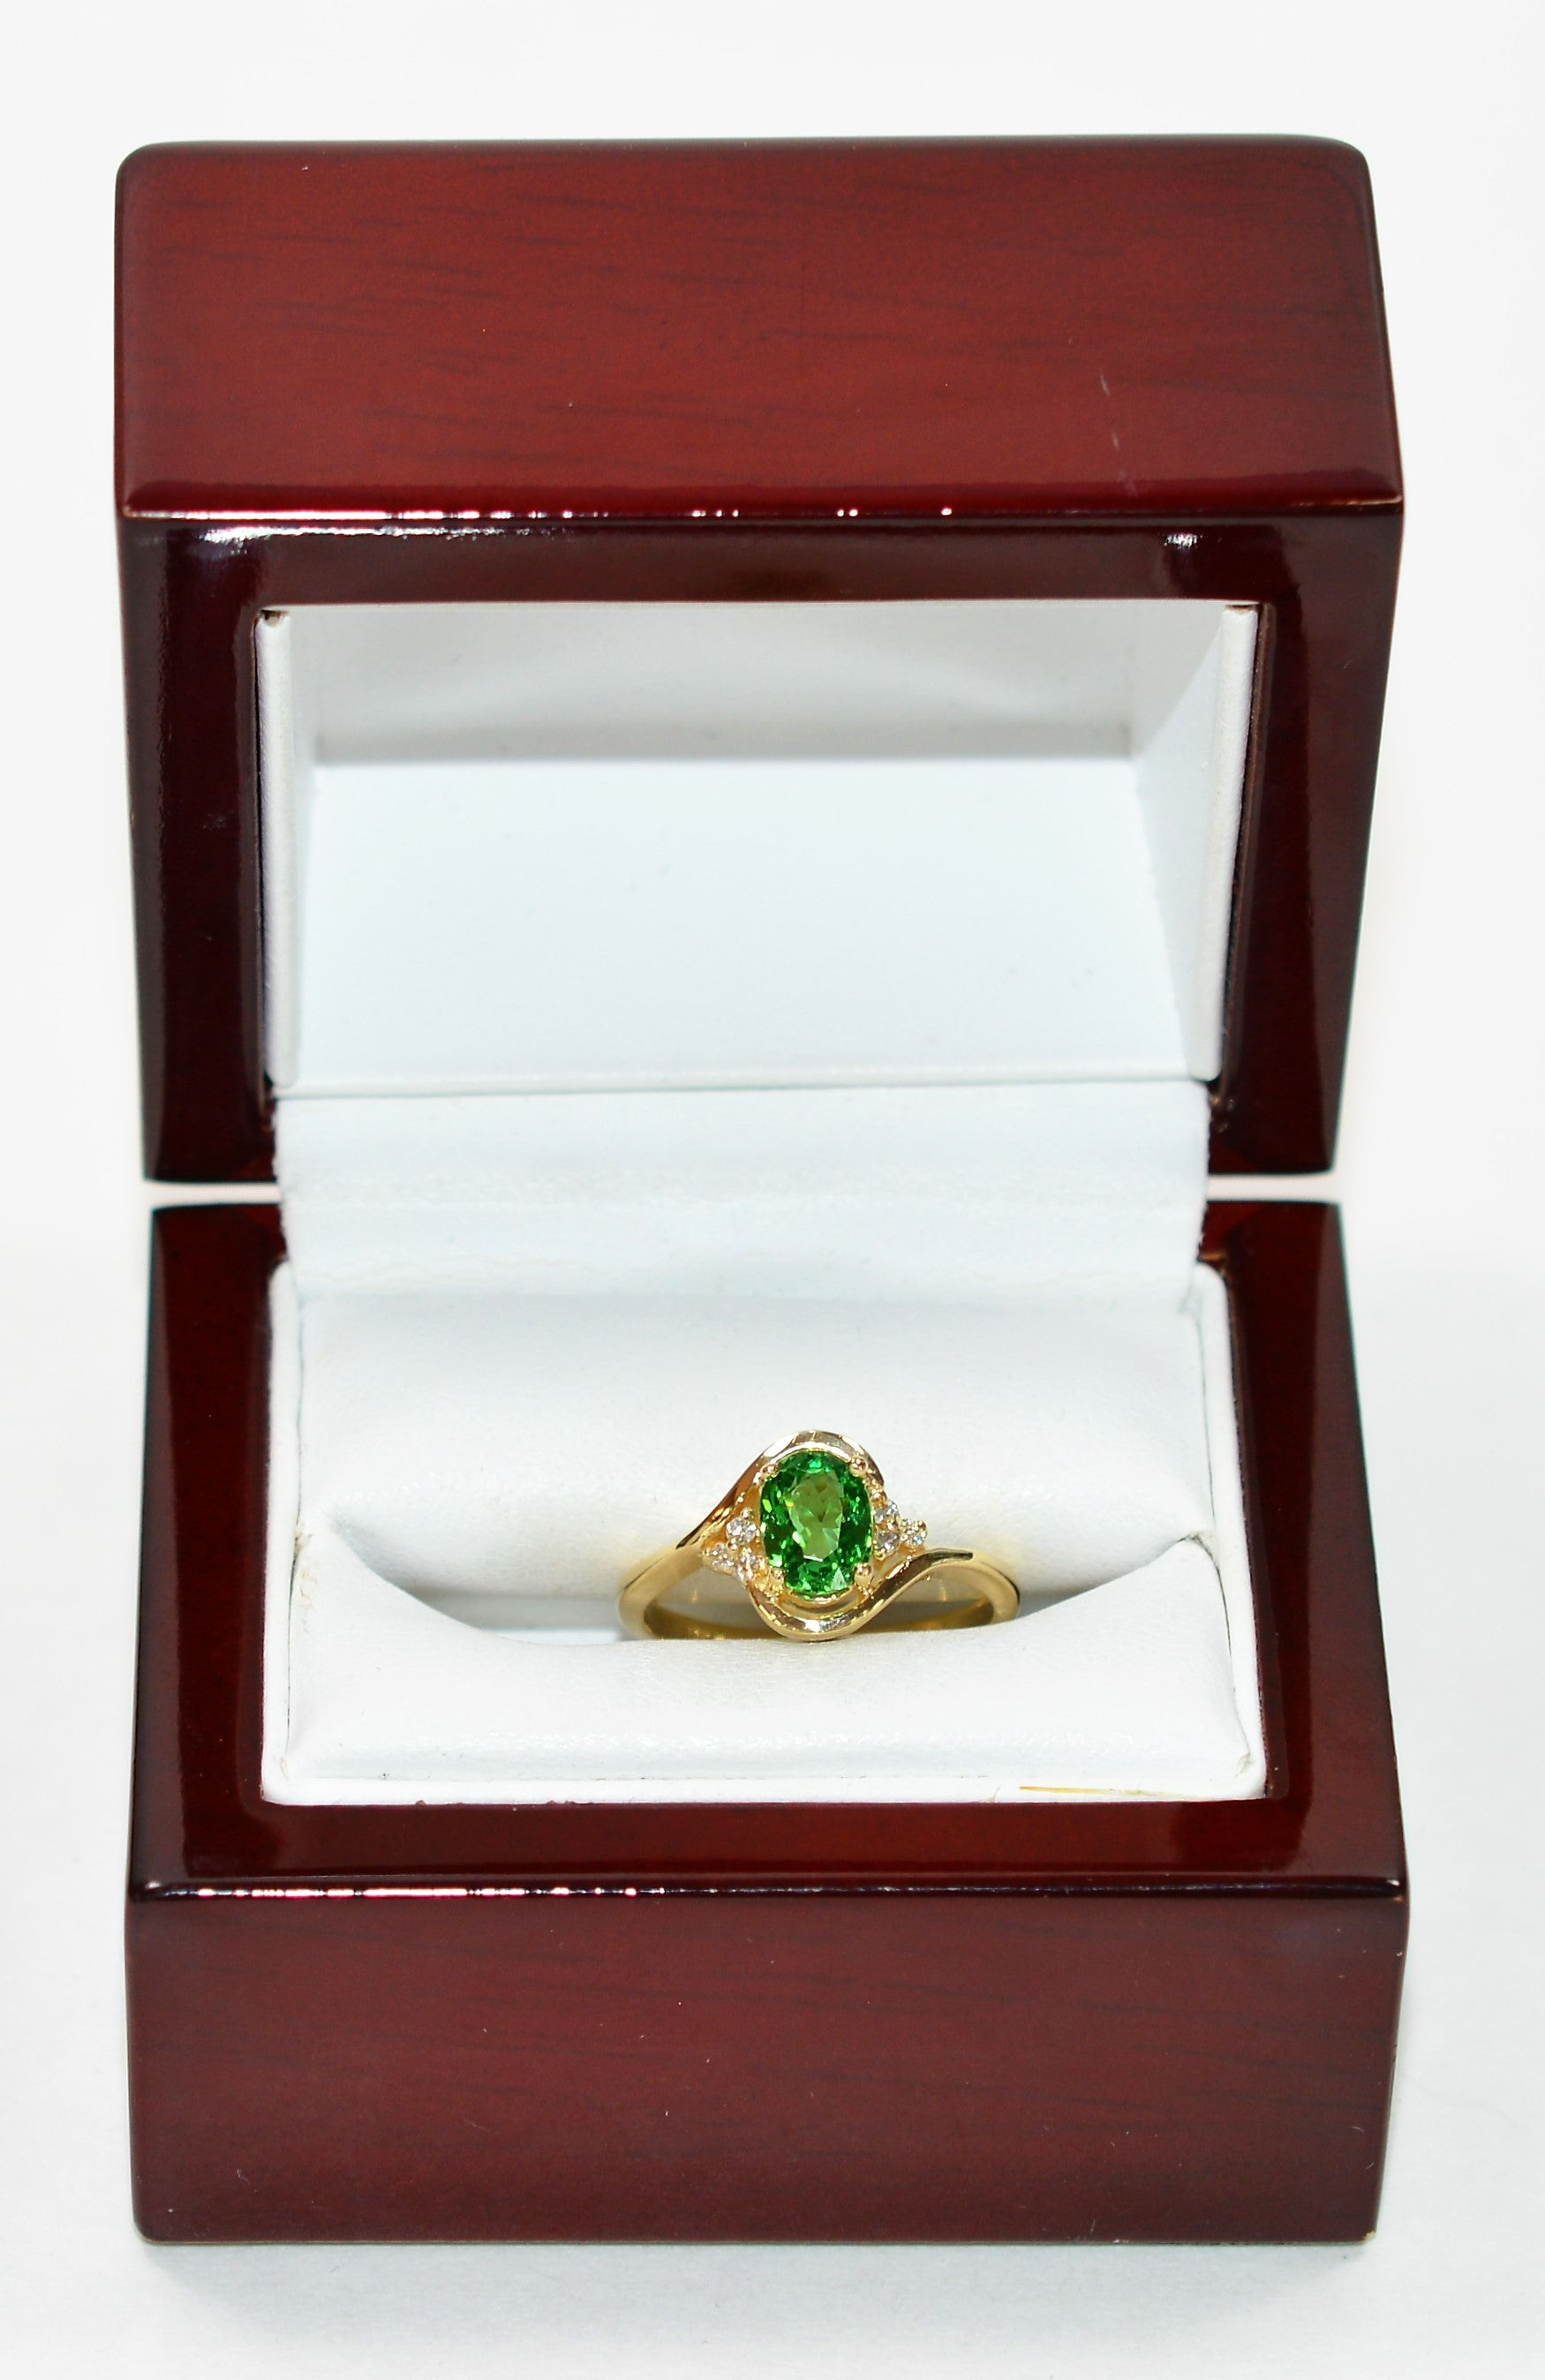 Natural Tsavorite Garnet & Diamond Ring 14K Solid Gold 1.16tcw Gemstone Ring Green Ring Garnet Ring January Birthstone Ring Estate Jewelry